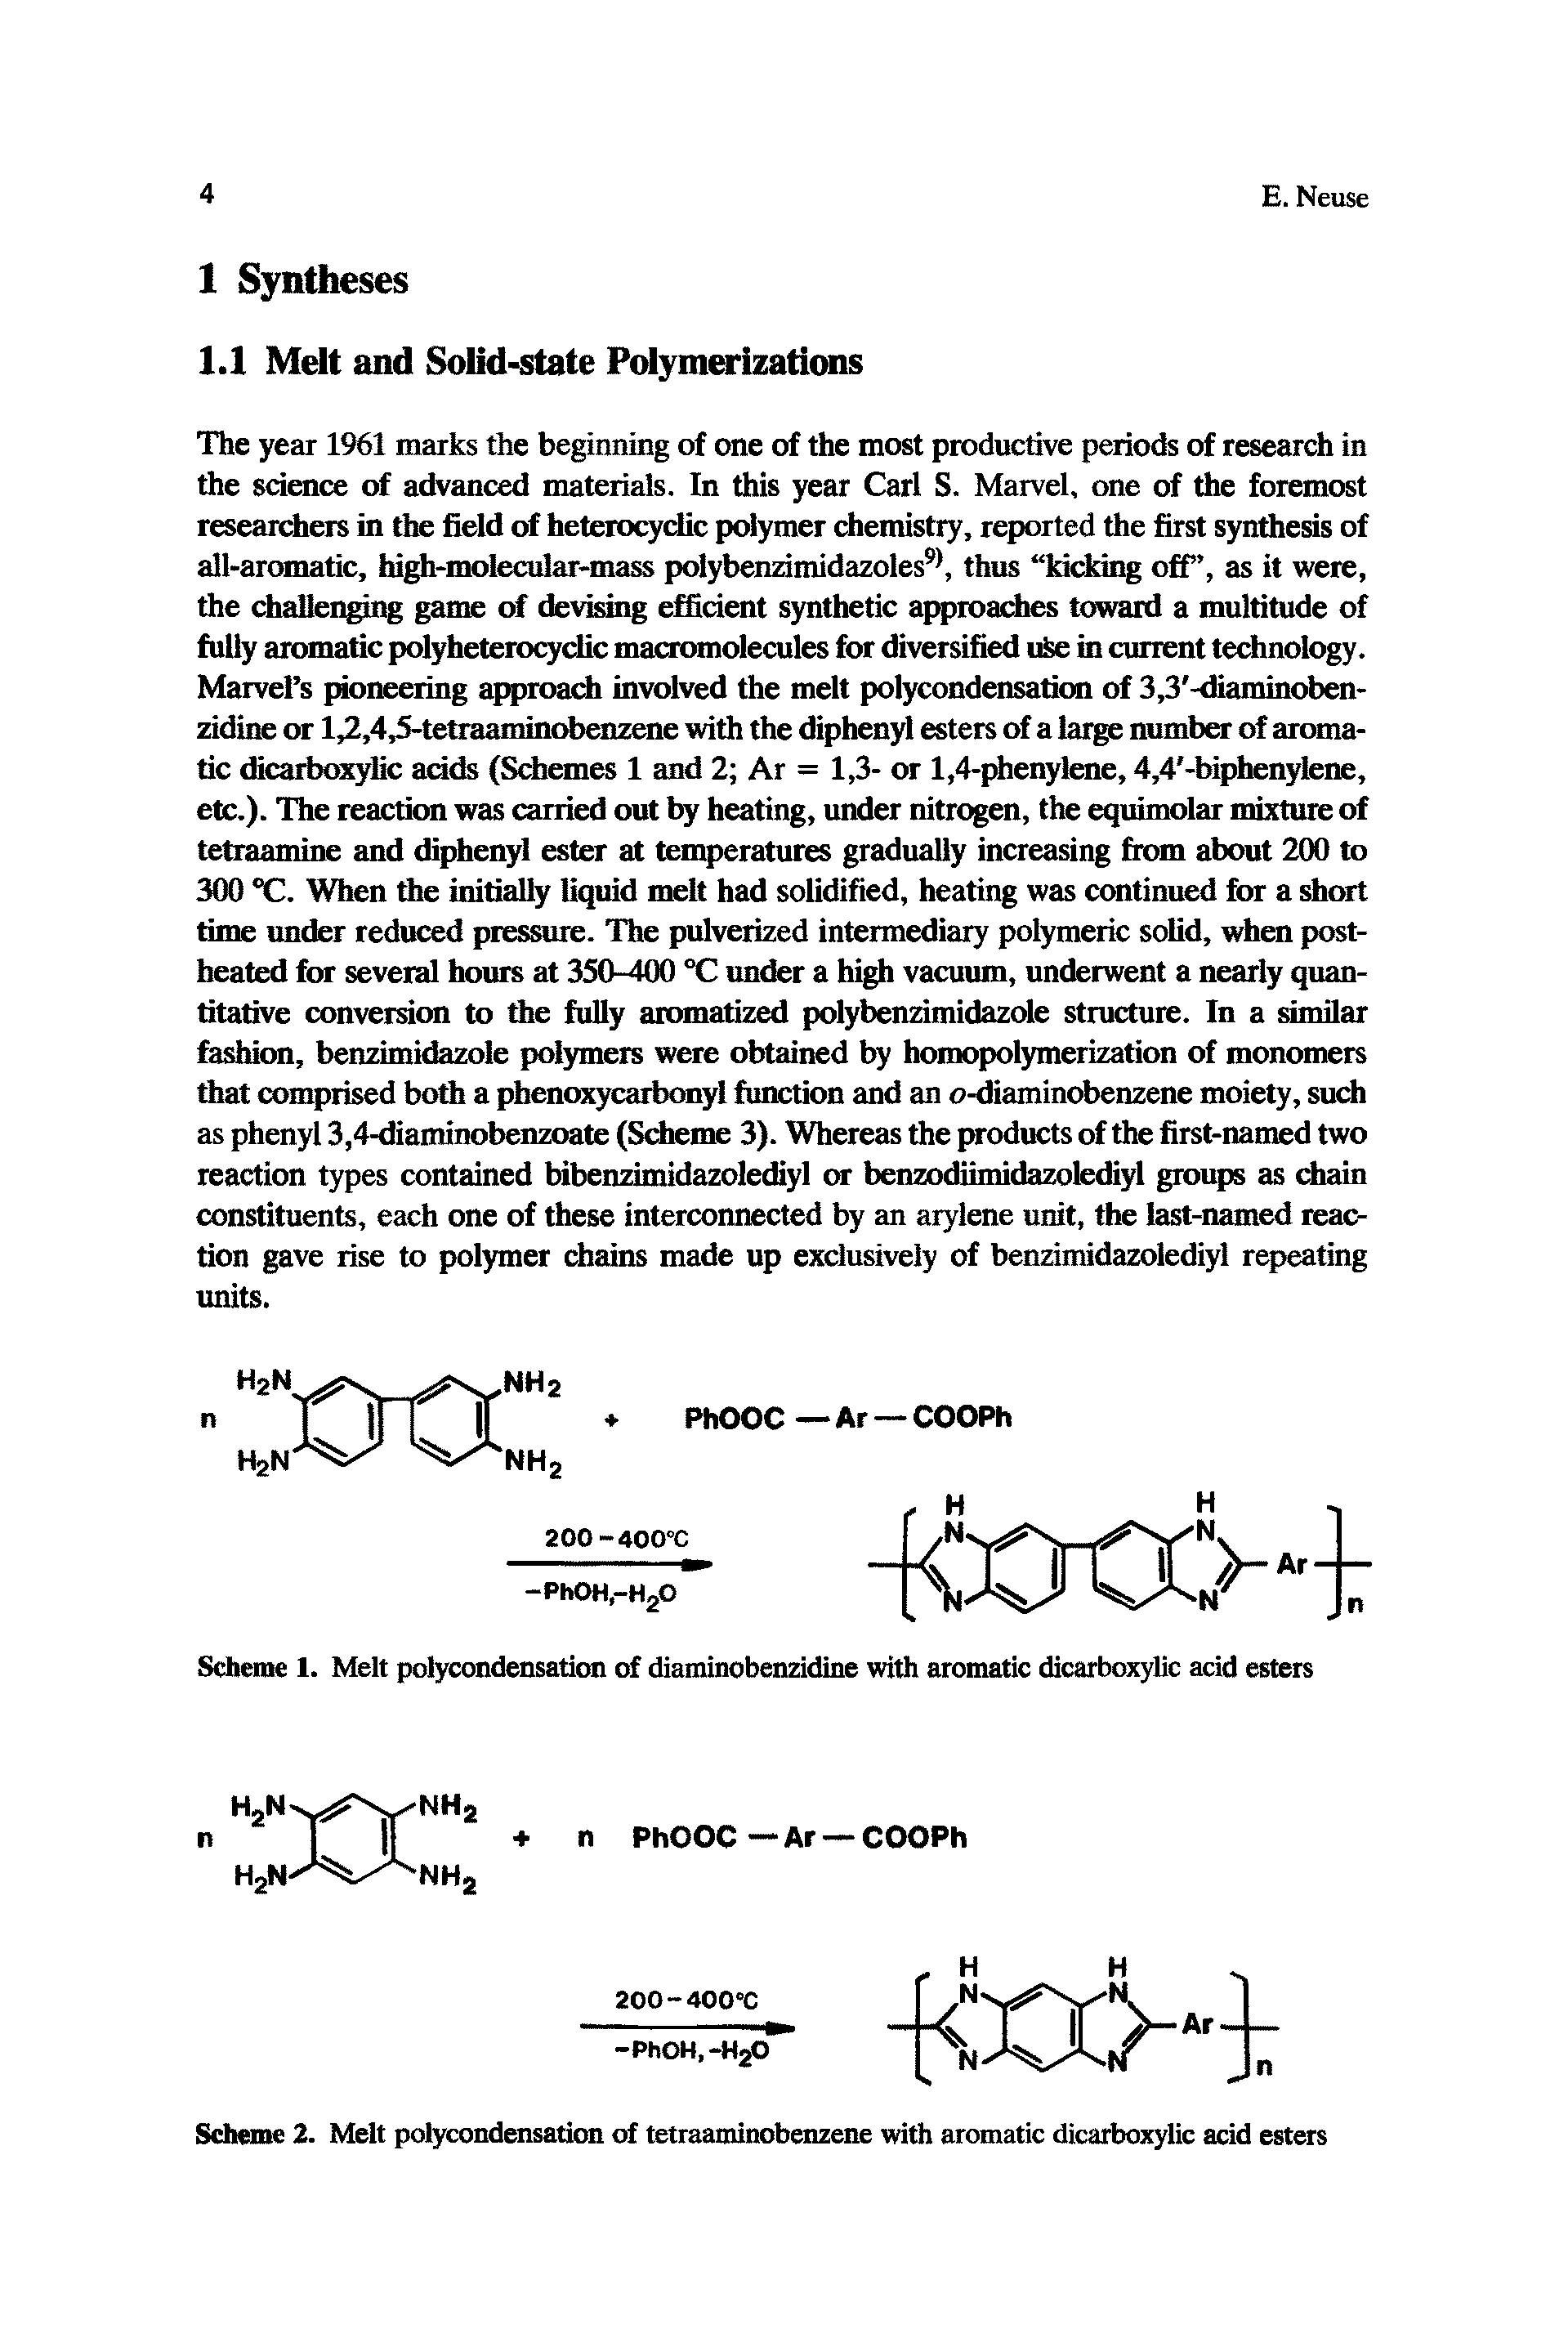 Scheme 1. Melt polycondensation of diaminobenzidine with aromatic dicarboxylic acid esters...